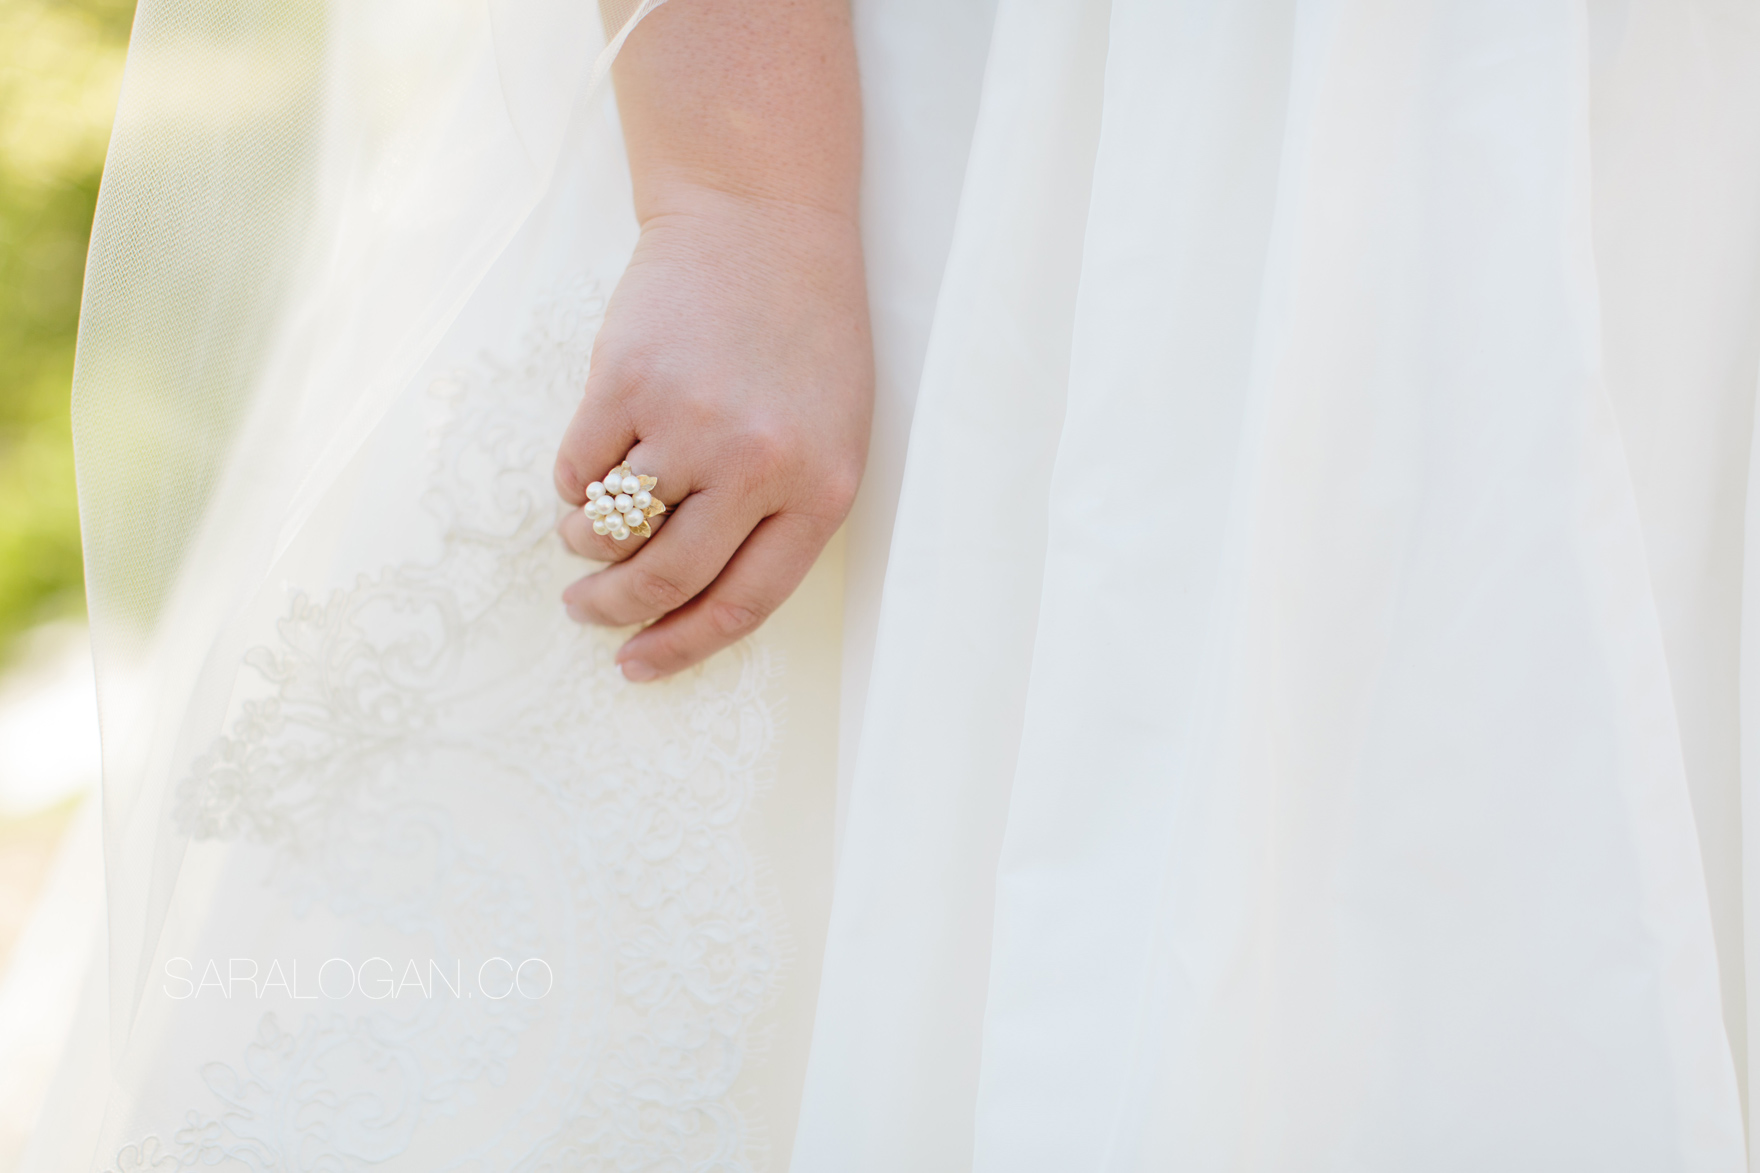 Vintage right-hand ring on wedding veil